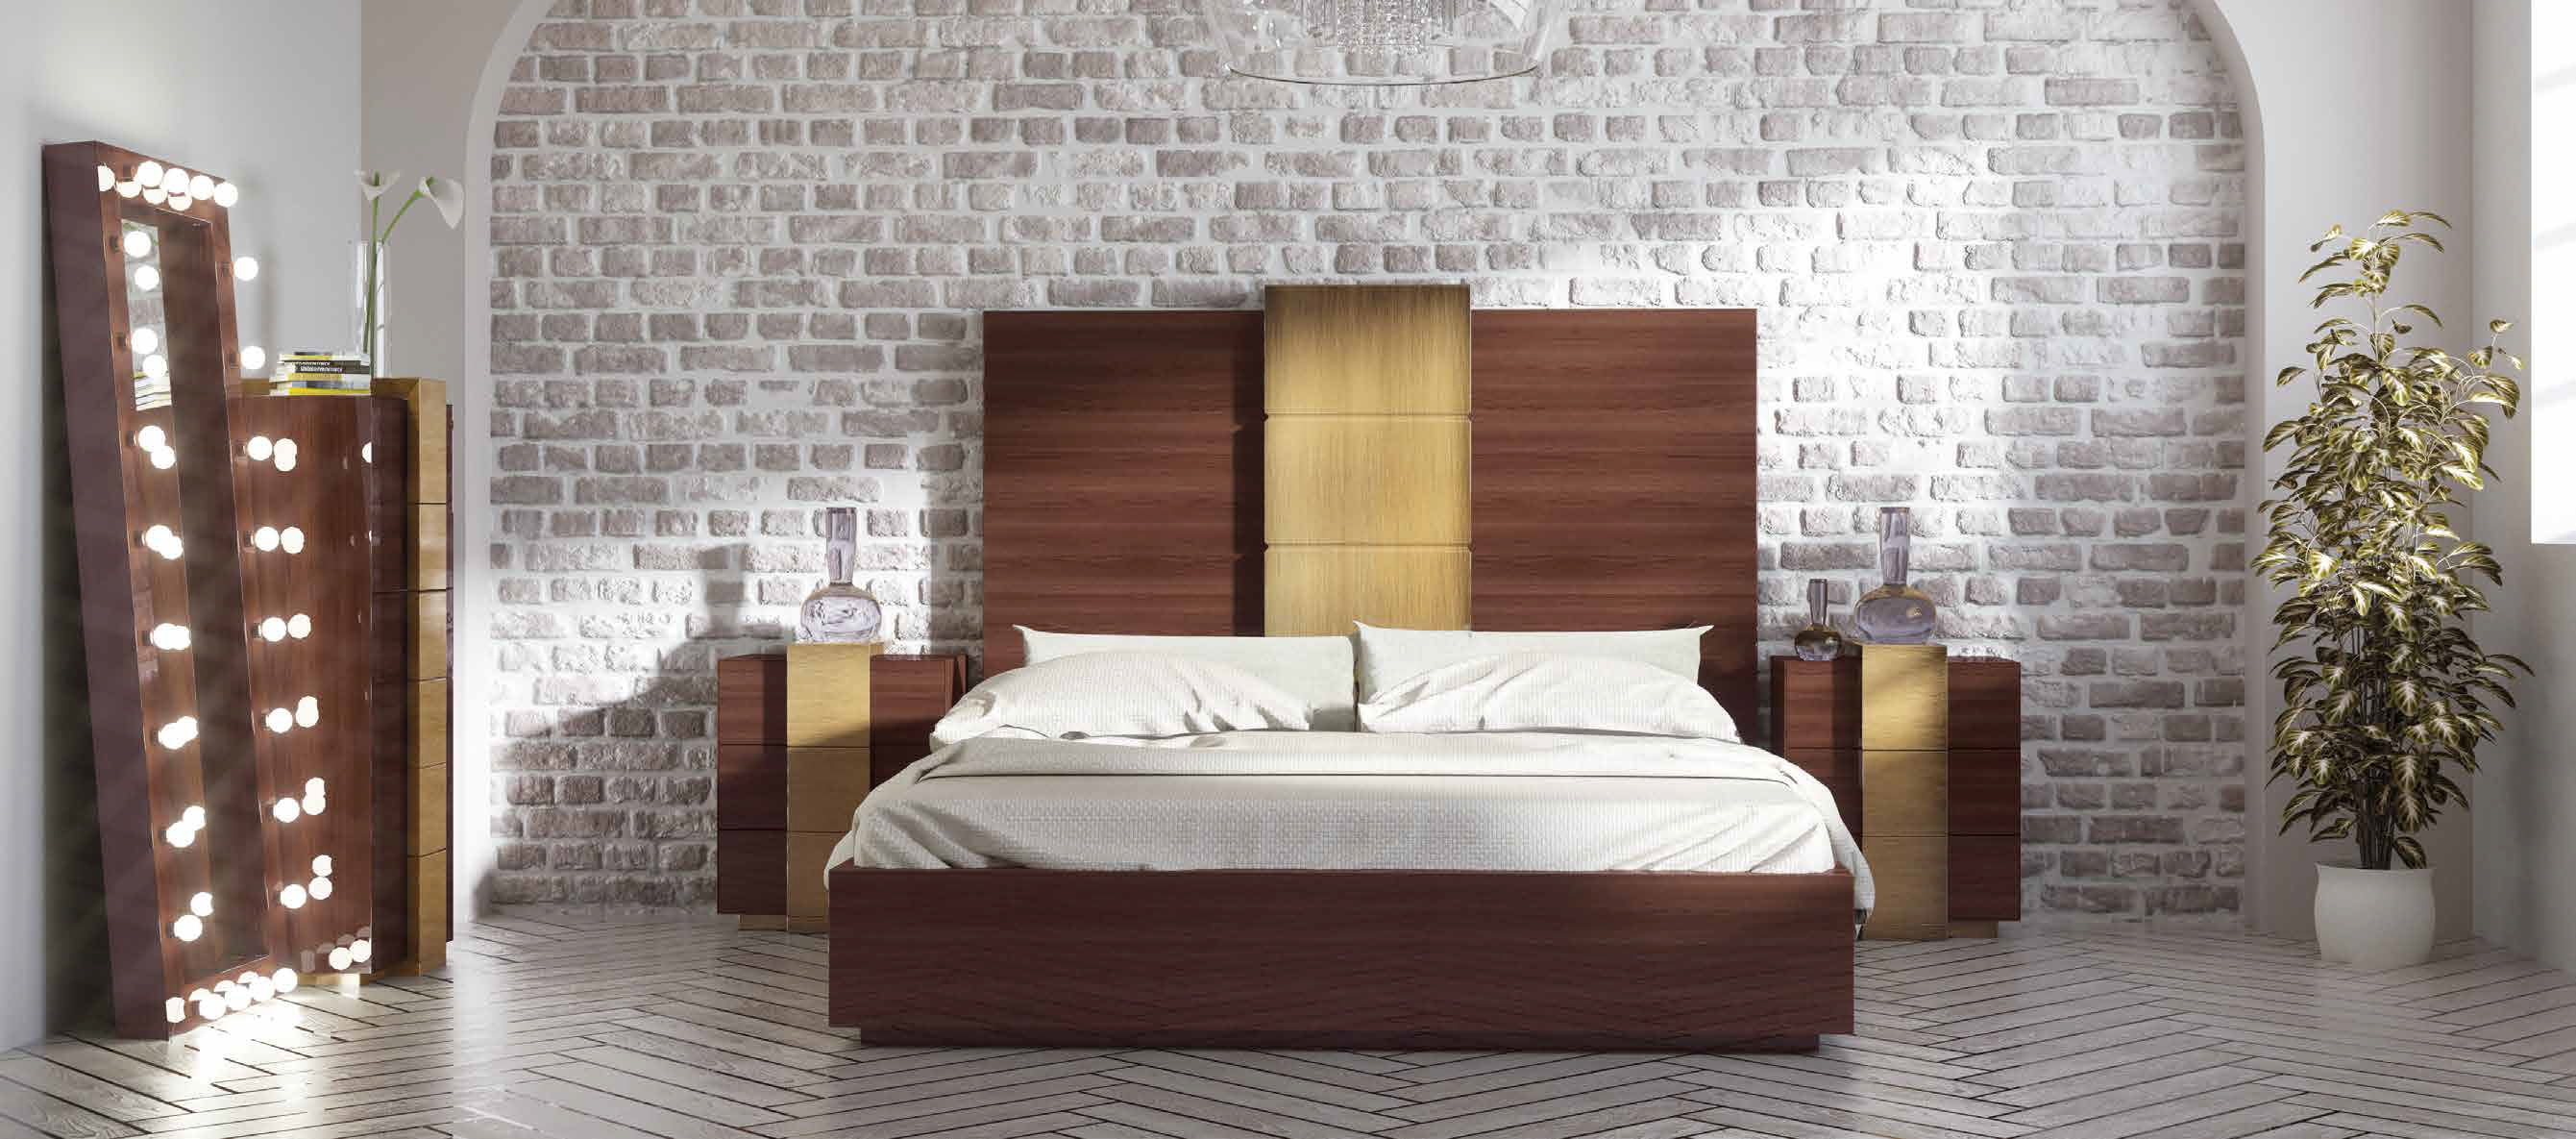 Brands Franco Furniture Bedrooms vol3, Spain DOR 13